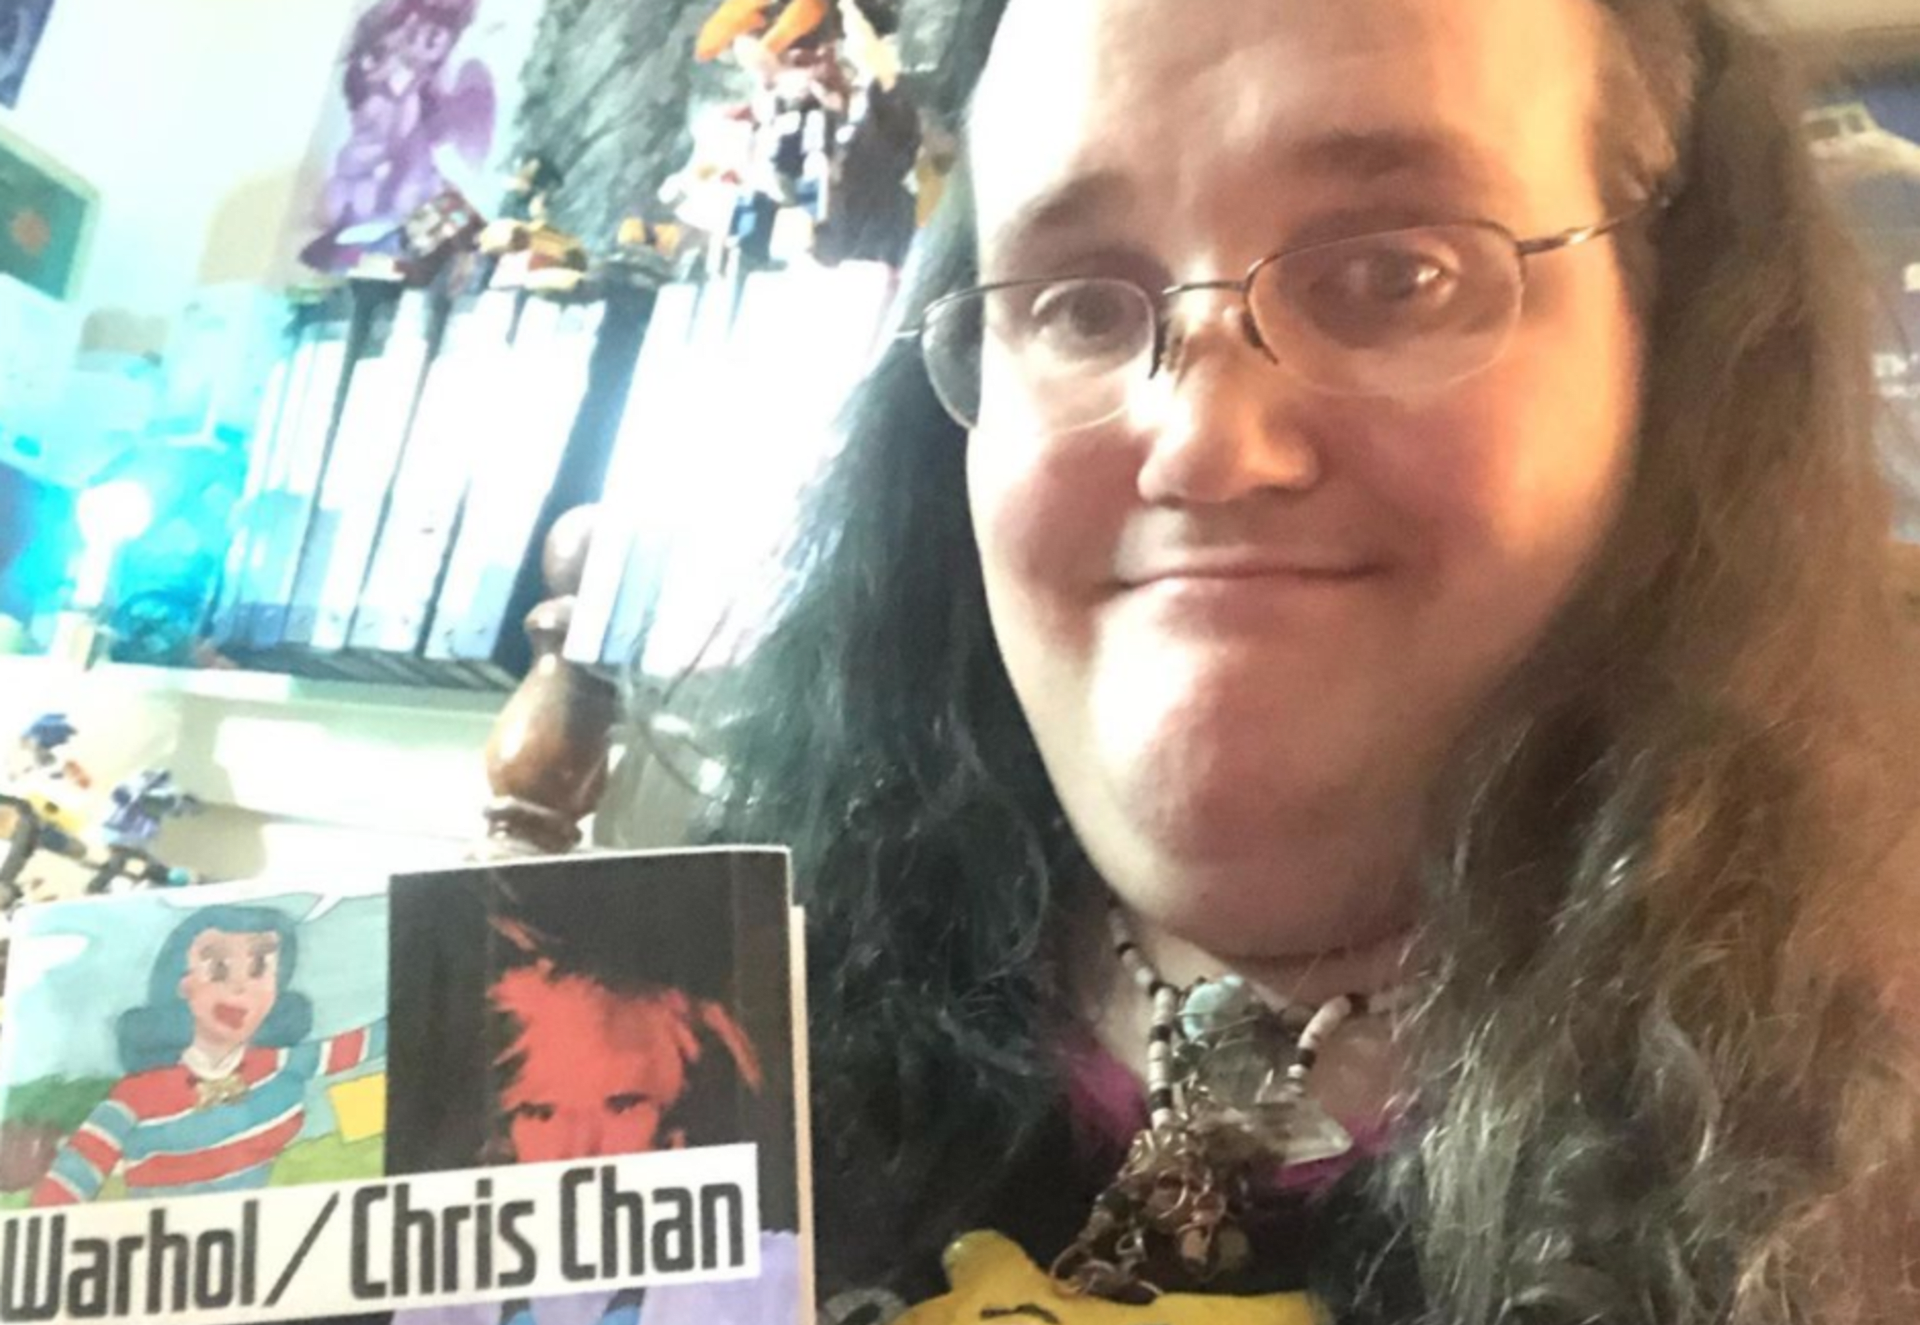 Policie ve Virginii zatkla populární trans youtuberku Chris Chanovou. (Autor: @christinewestonchandler)